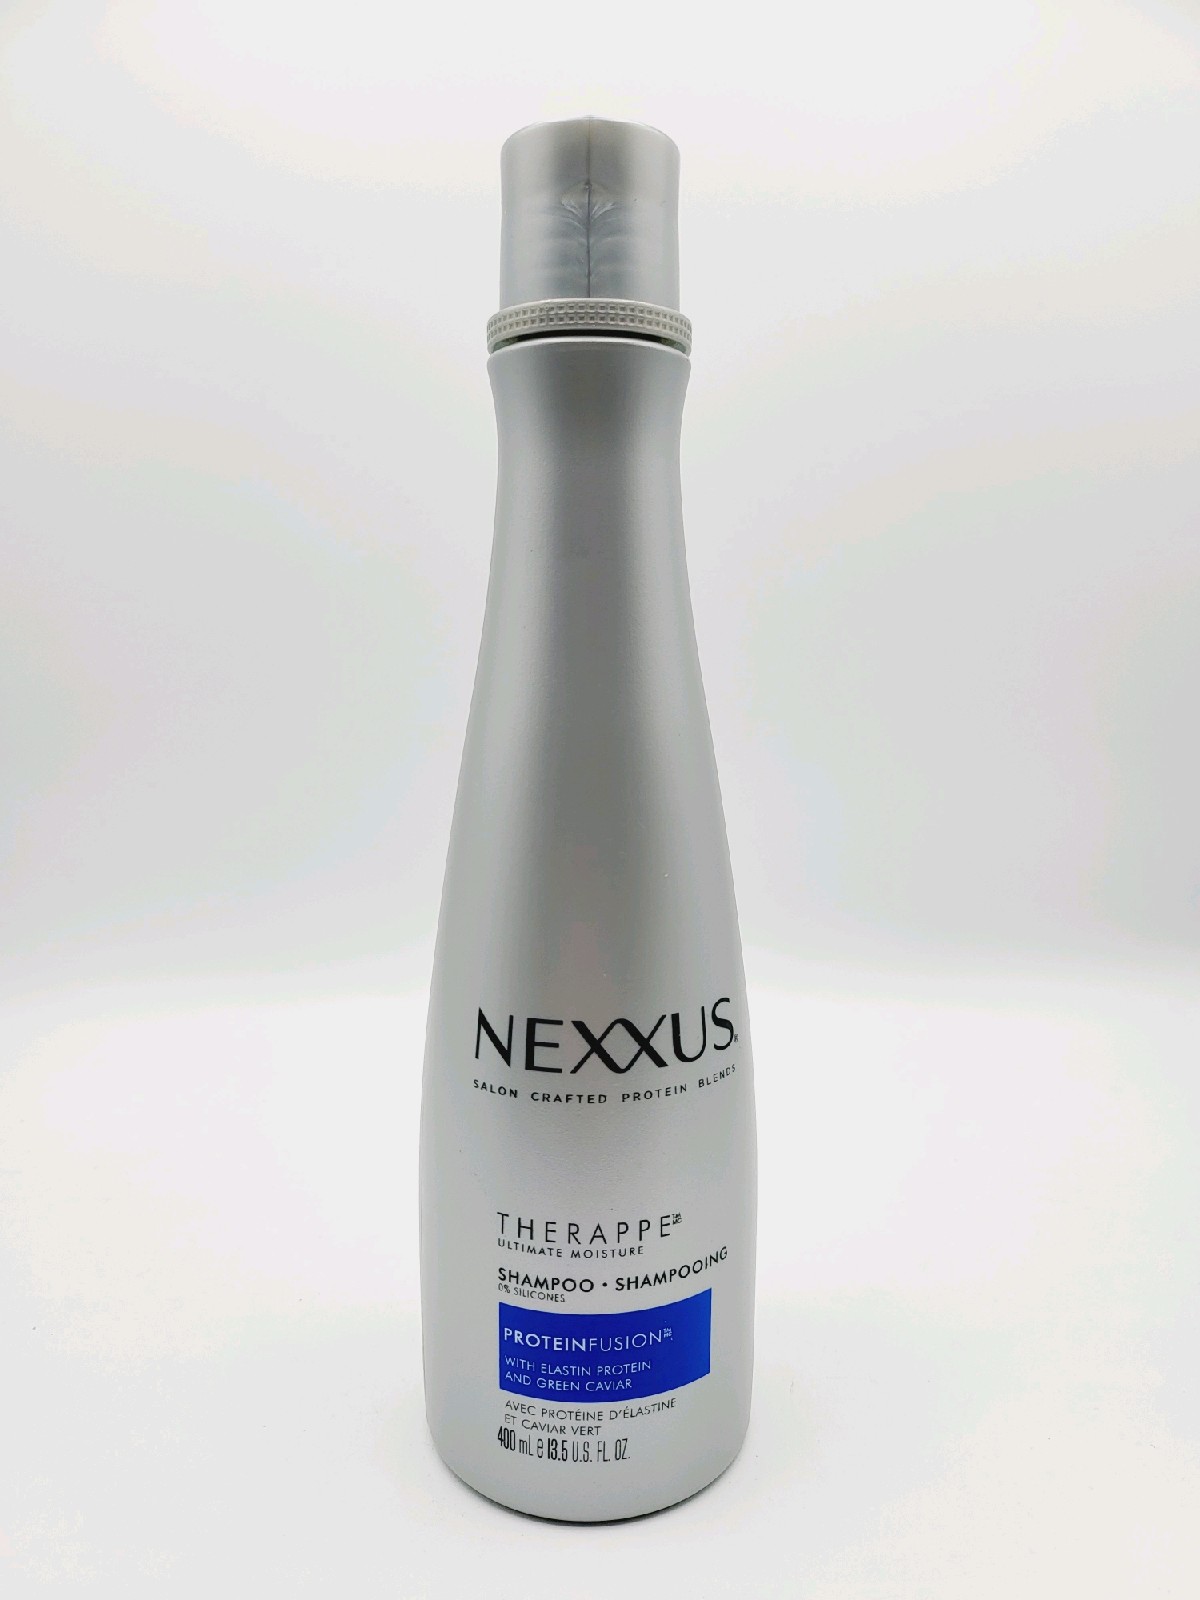 Nexxus Therappe